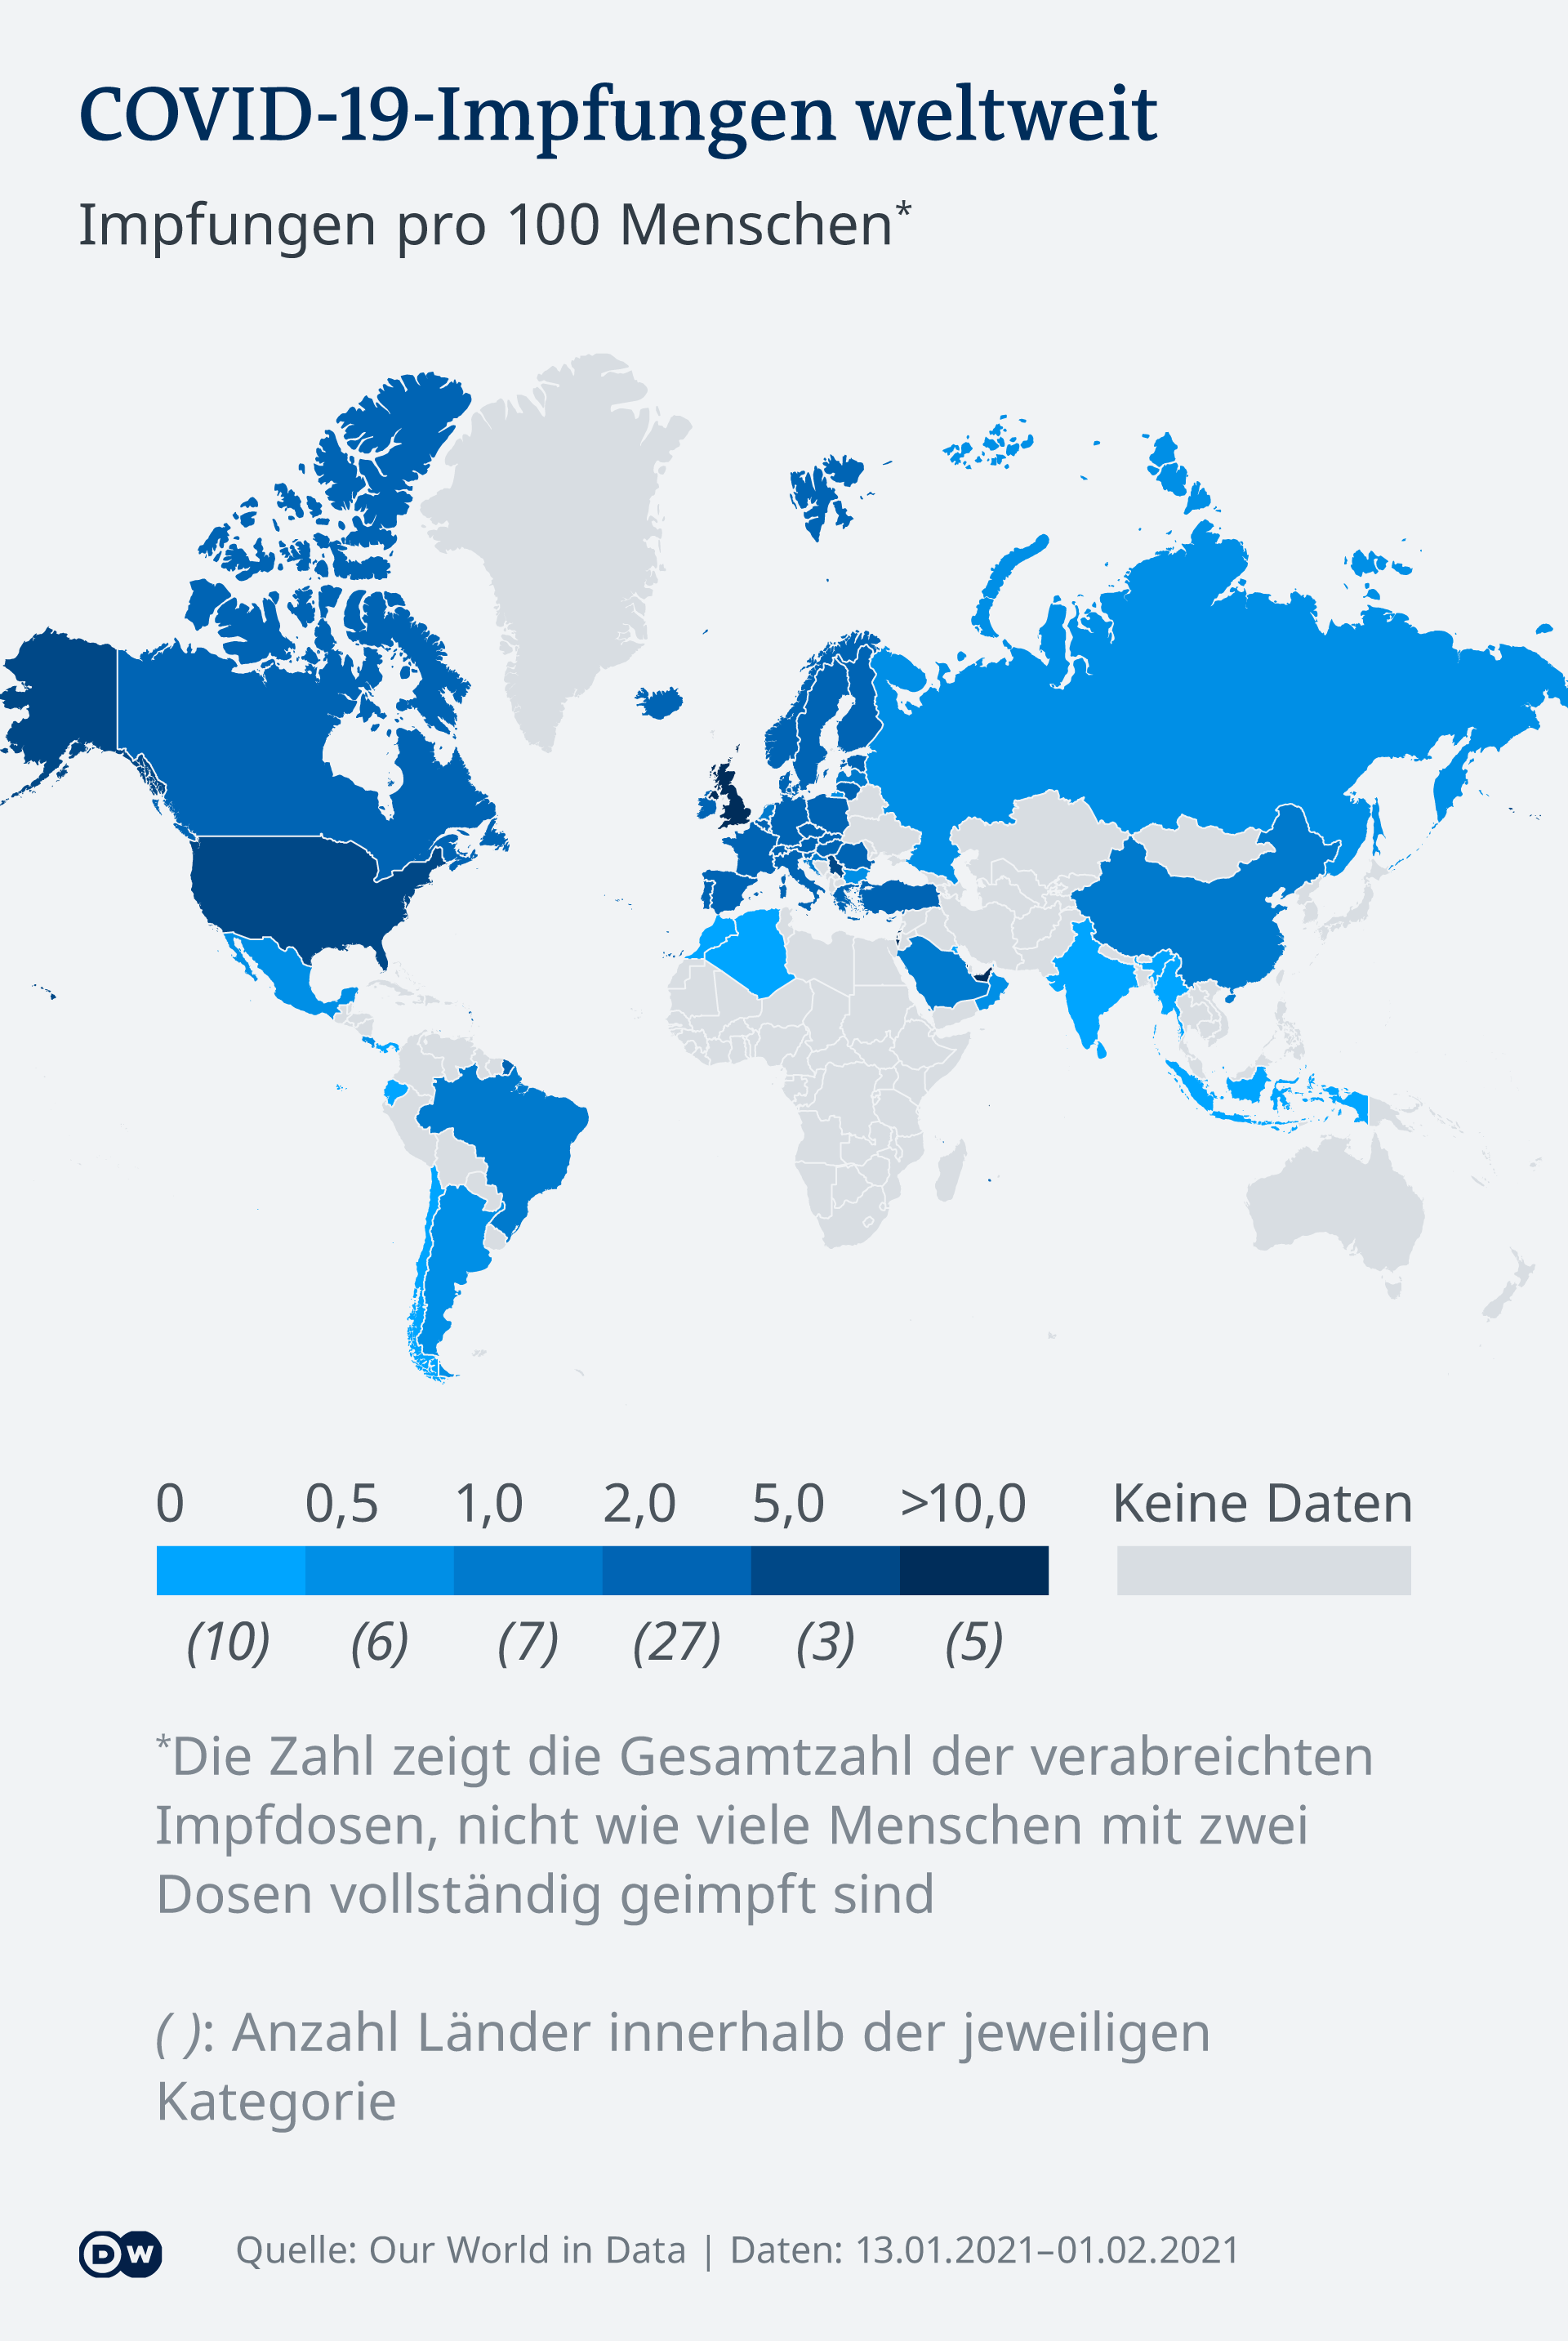 Infografik COVID-19 Impfungen pro 100 Menschen weltweit 1.2.2021 DE